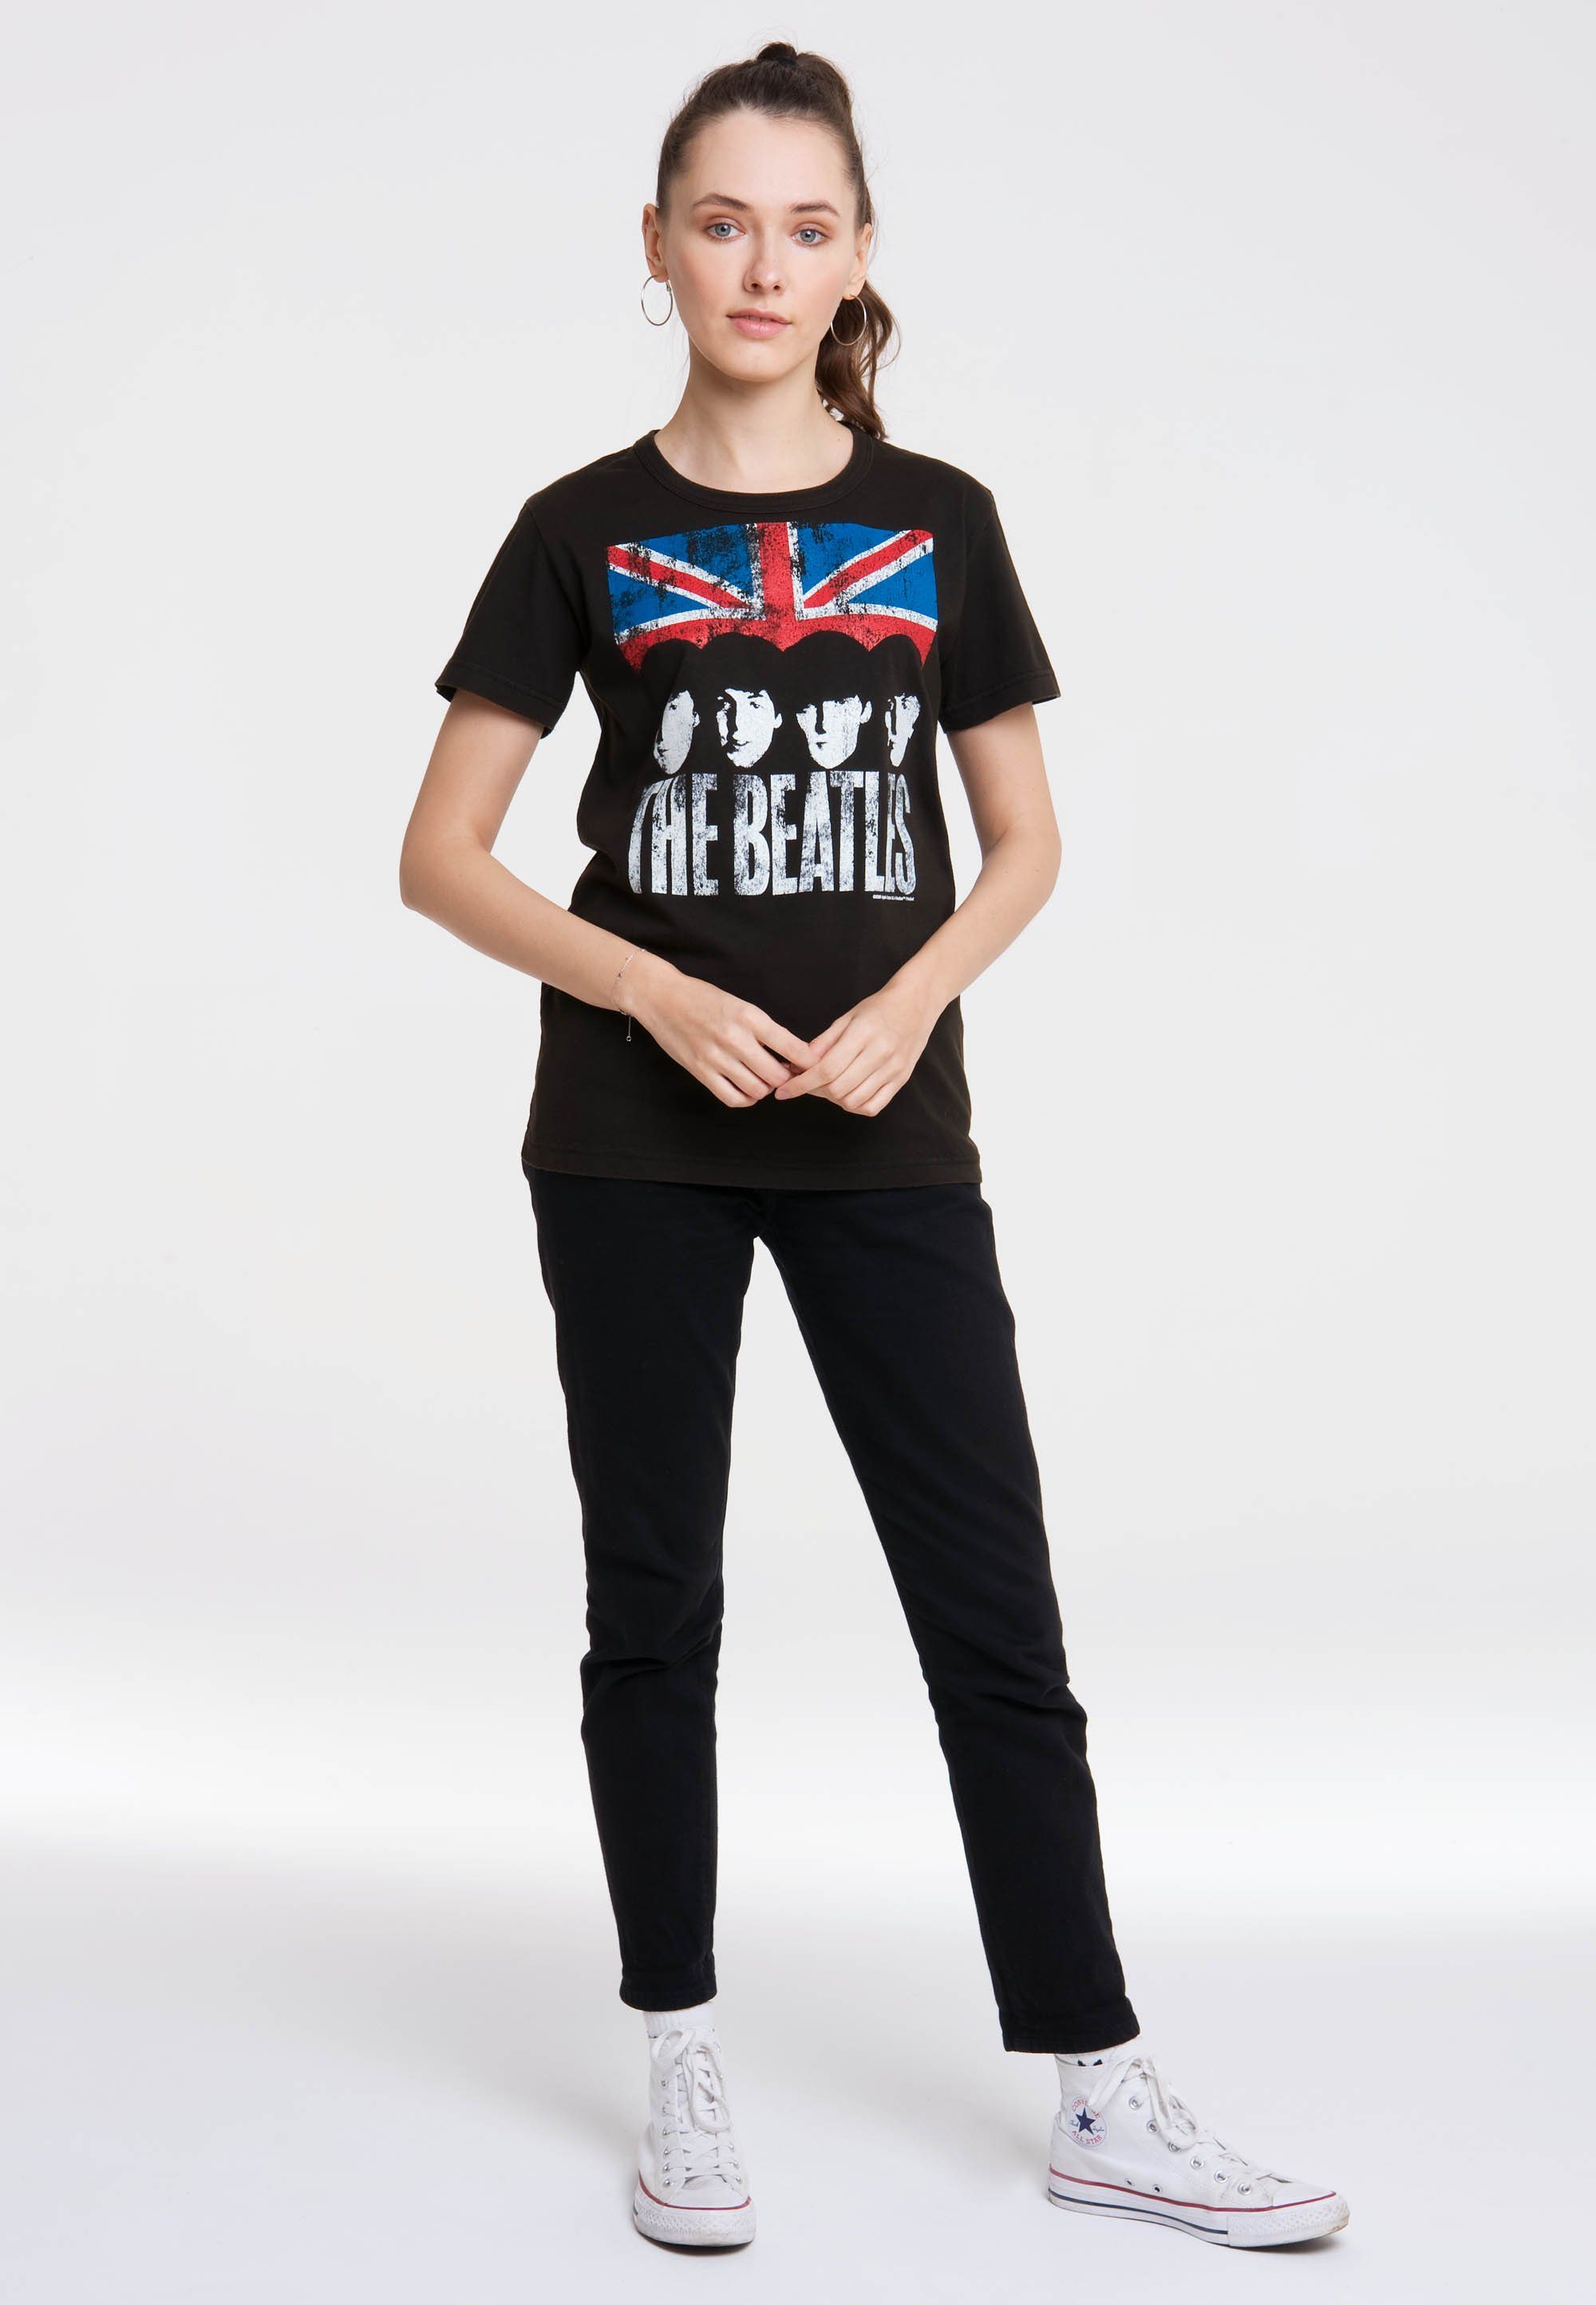 LOGOSHIRT T-Shirt The Beatles Besonders mit klassischen durch Print, lizenziertem Rundhalsausschnitt bequem